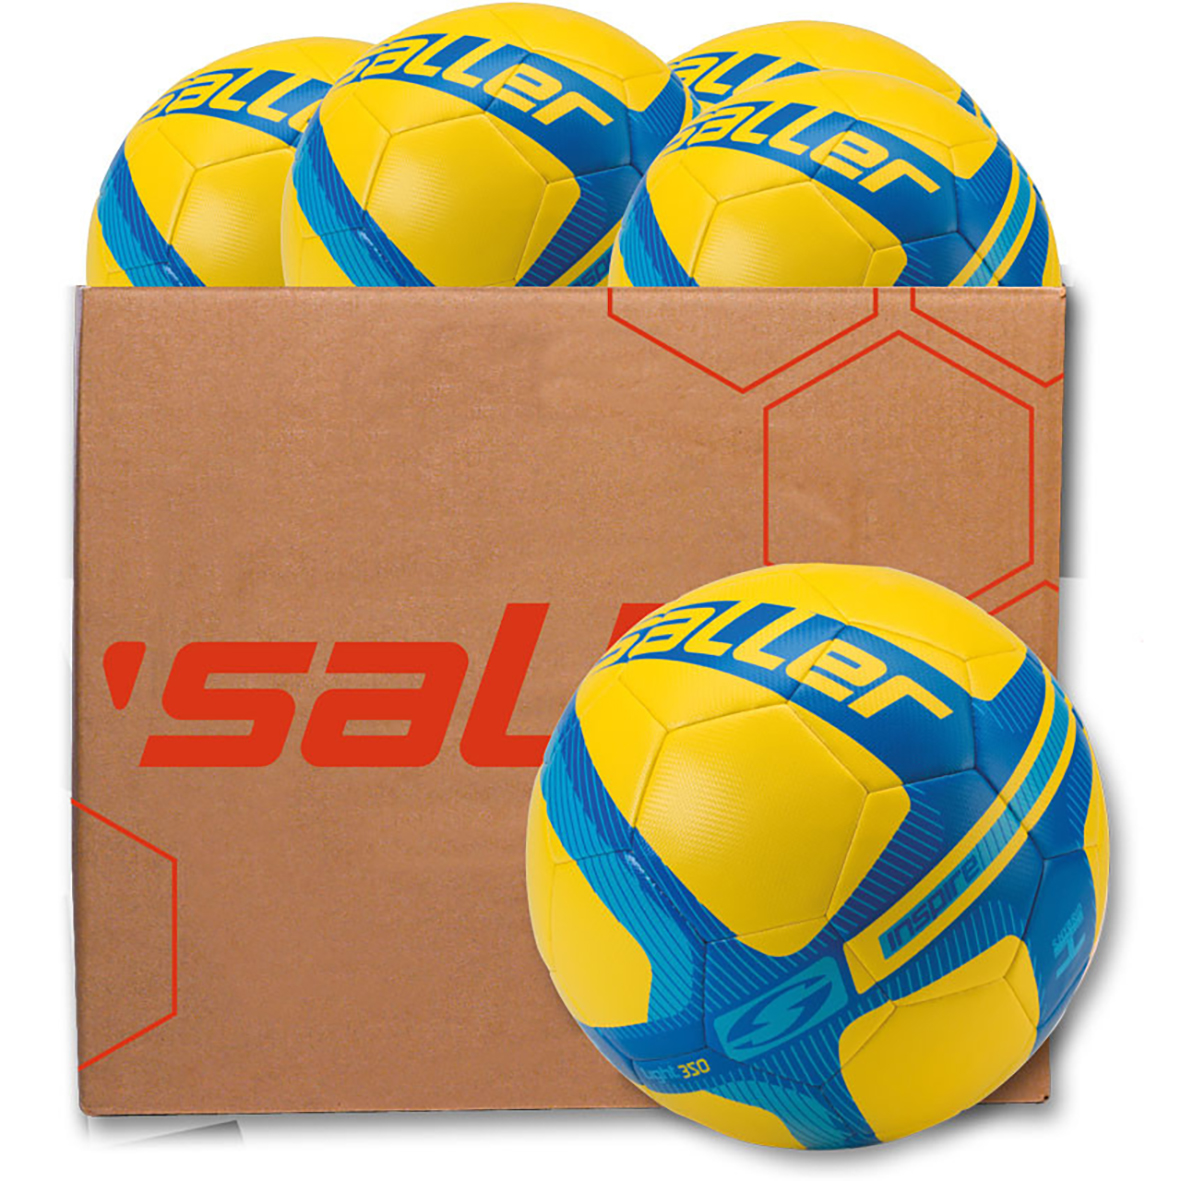 SALLERINSPIRE LIGHT 350 G., FOOTBALL BALL (10 BALLS PACK)..